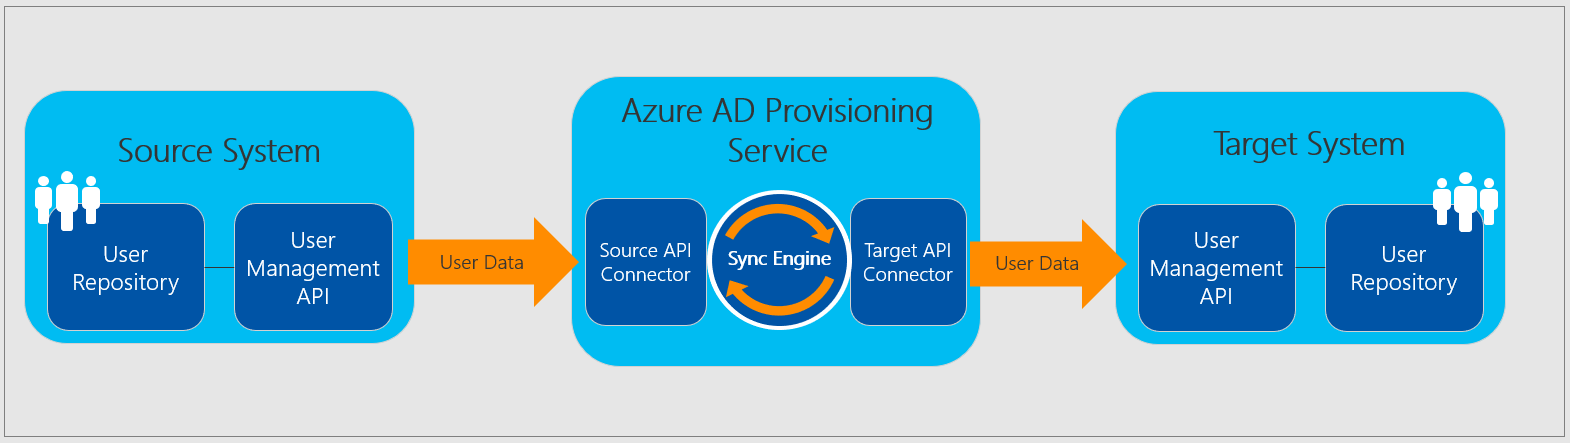 Azure AD Provisioning Service